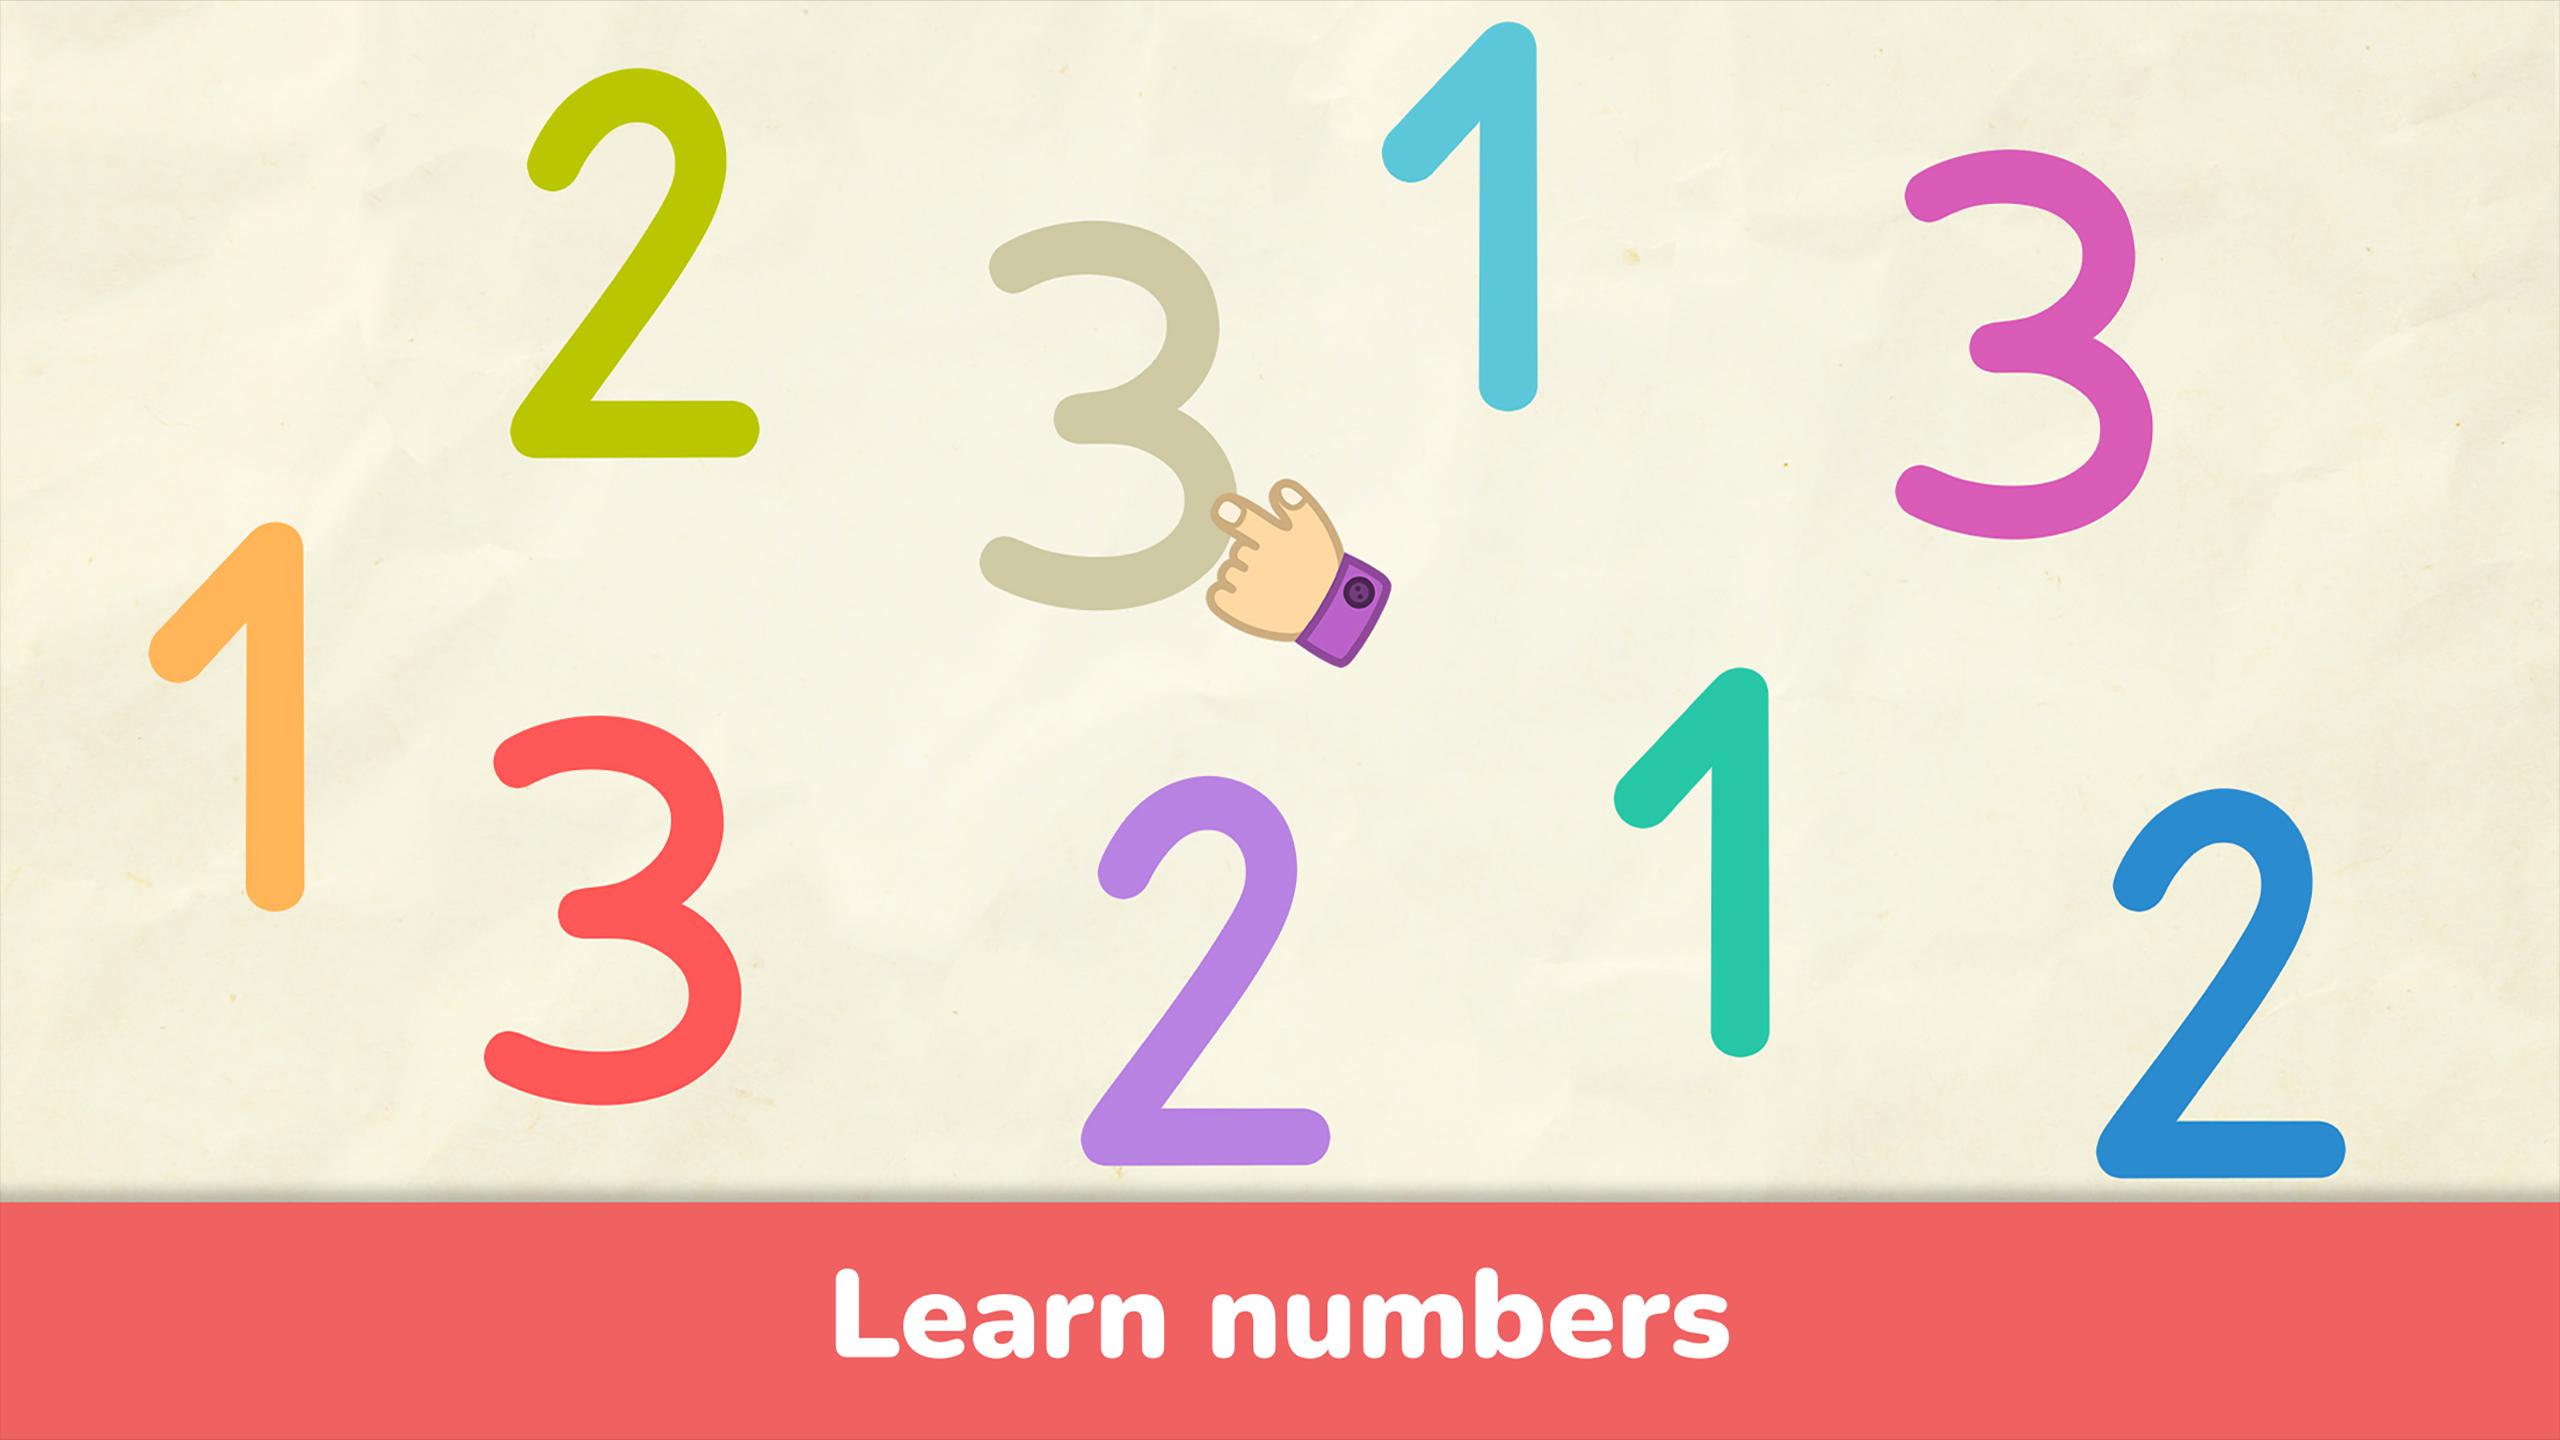 Код цифра игра. Цифры для детей. Изучаем цифры. Игра цифры. Учим цифры.